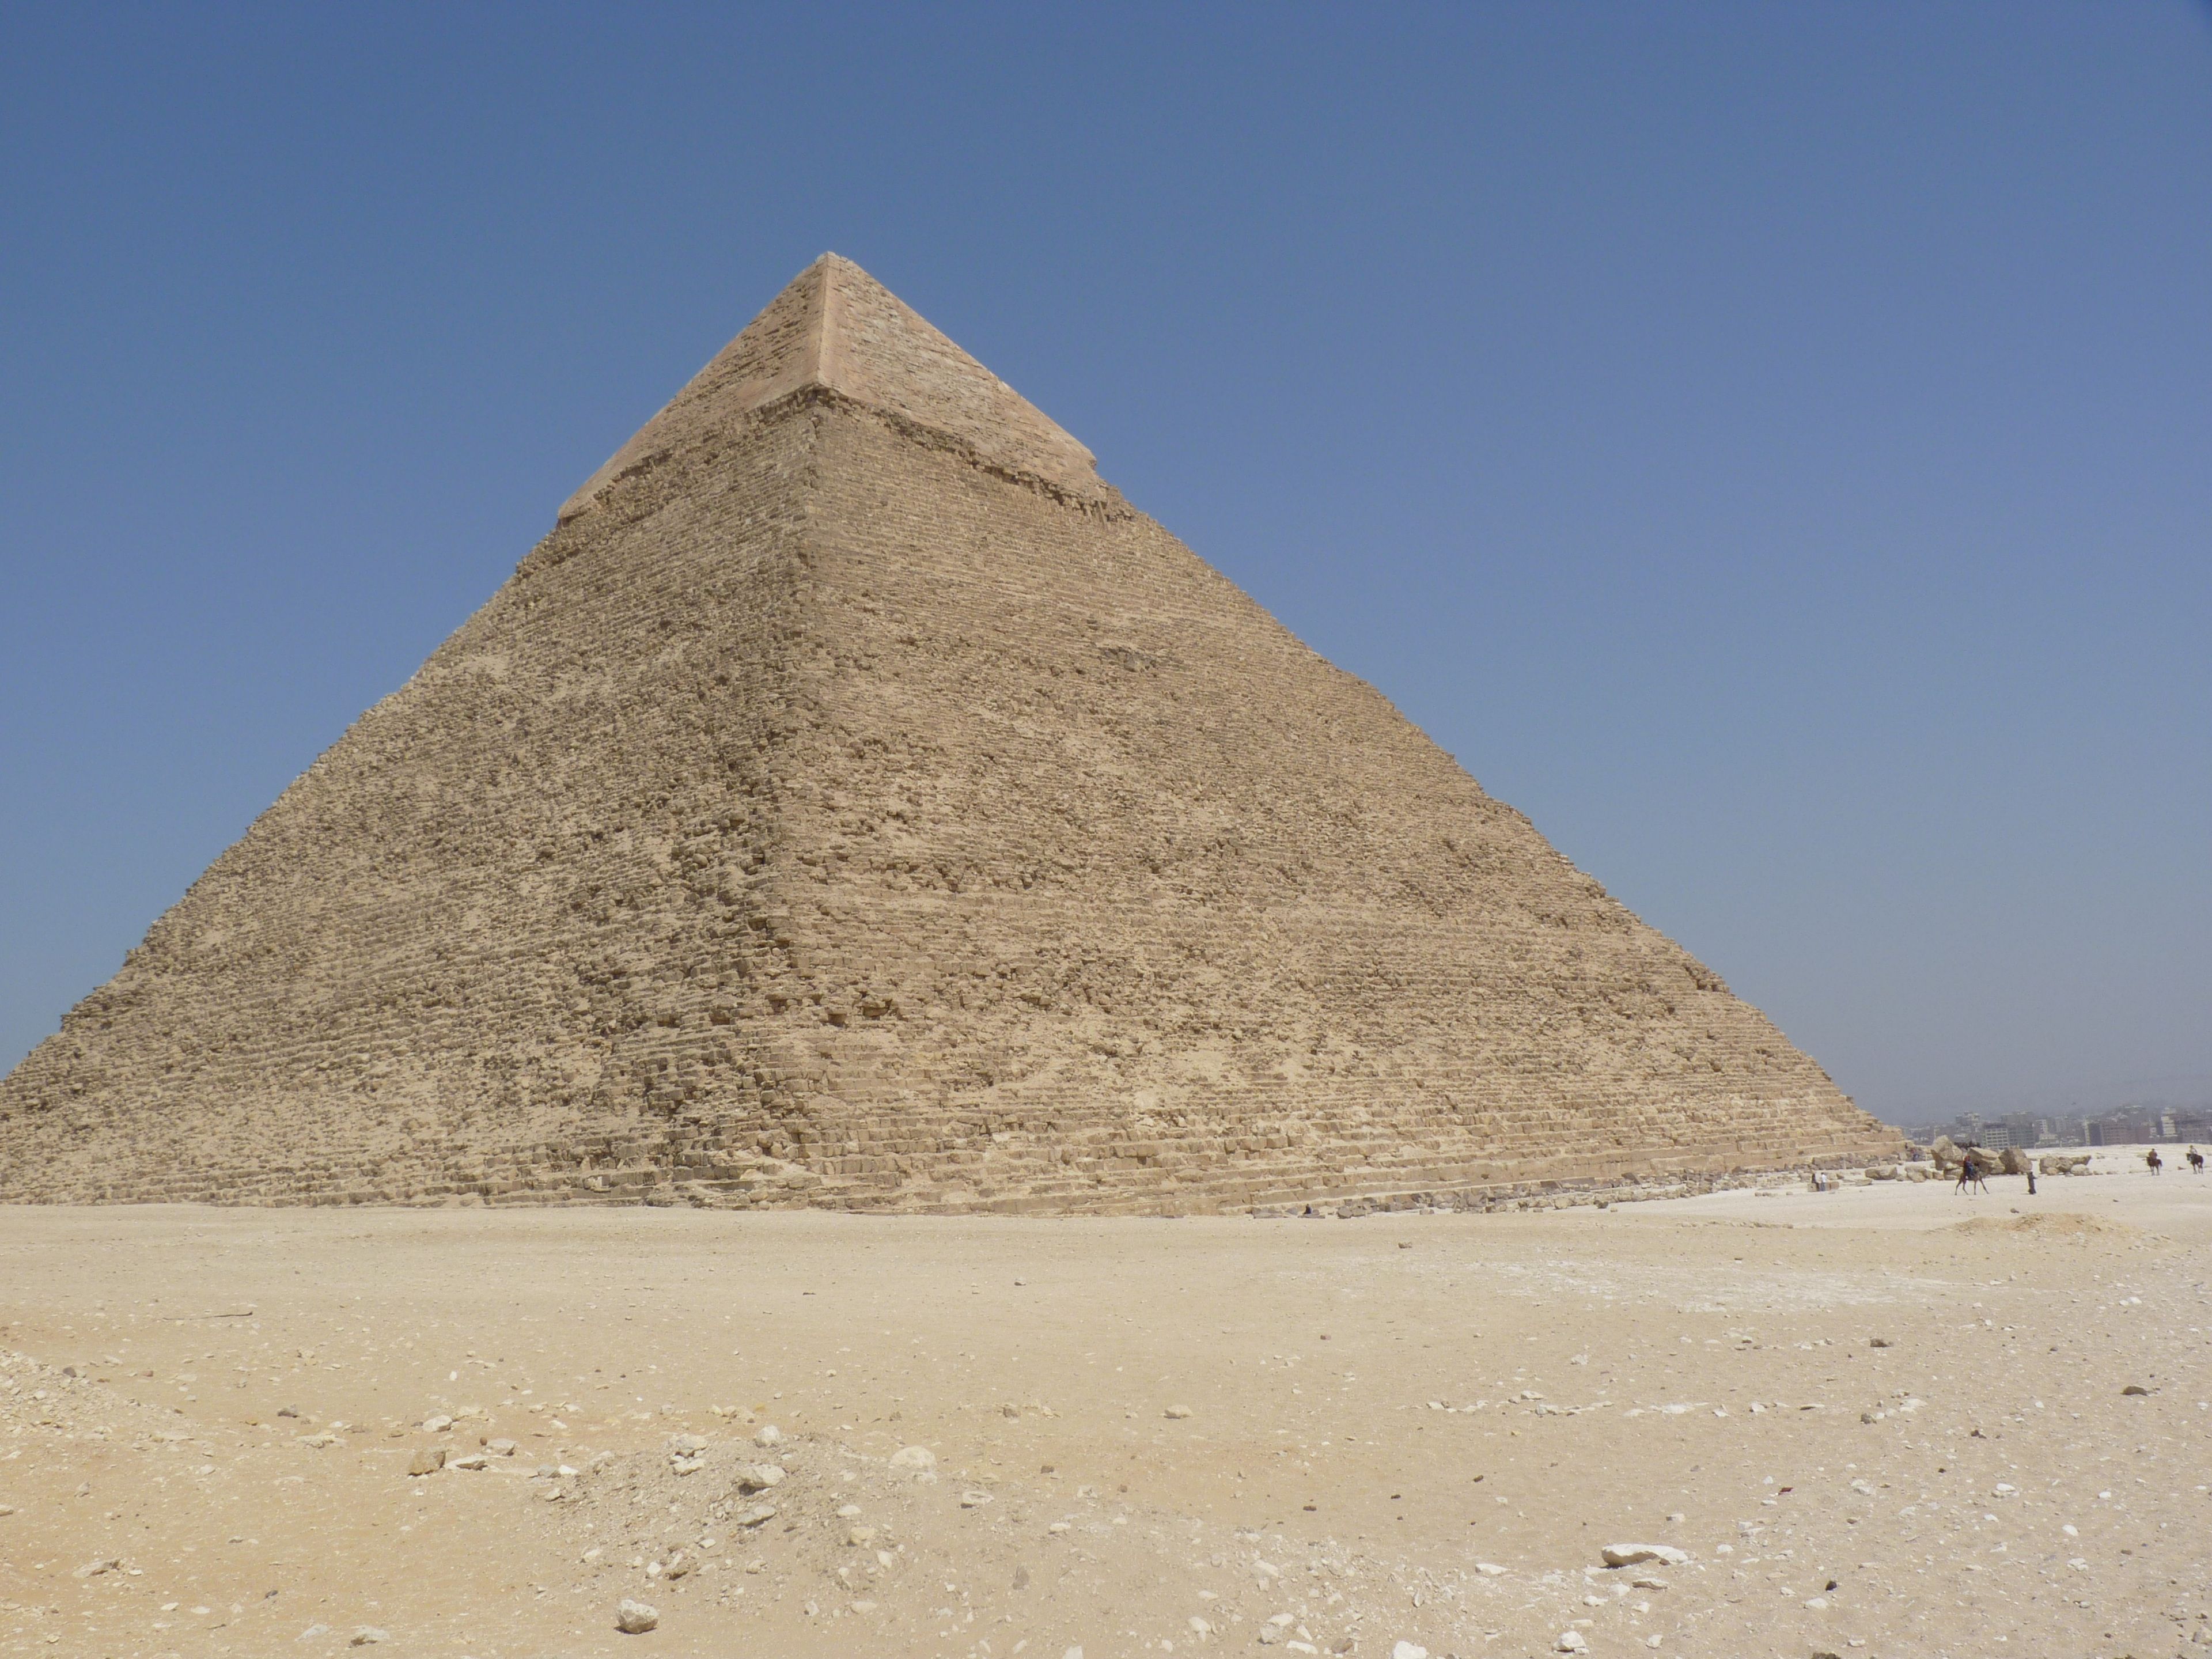 A pyramid in Giza, Egypt.